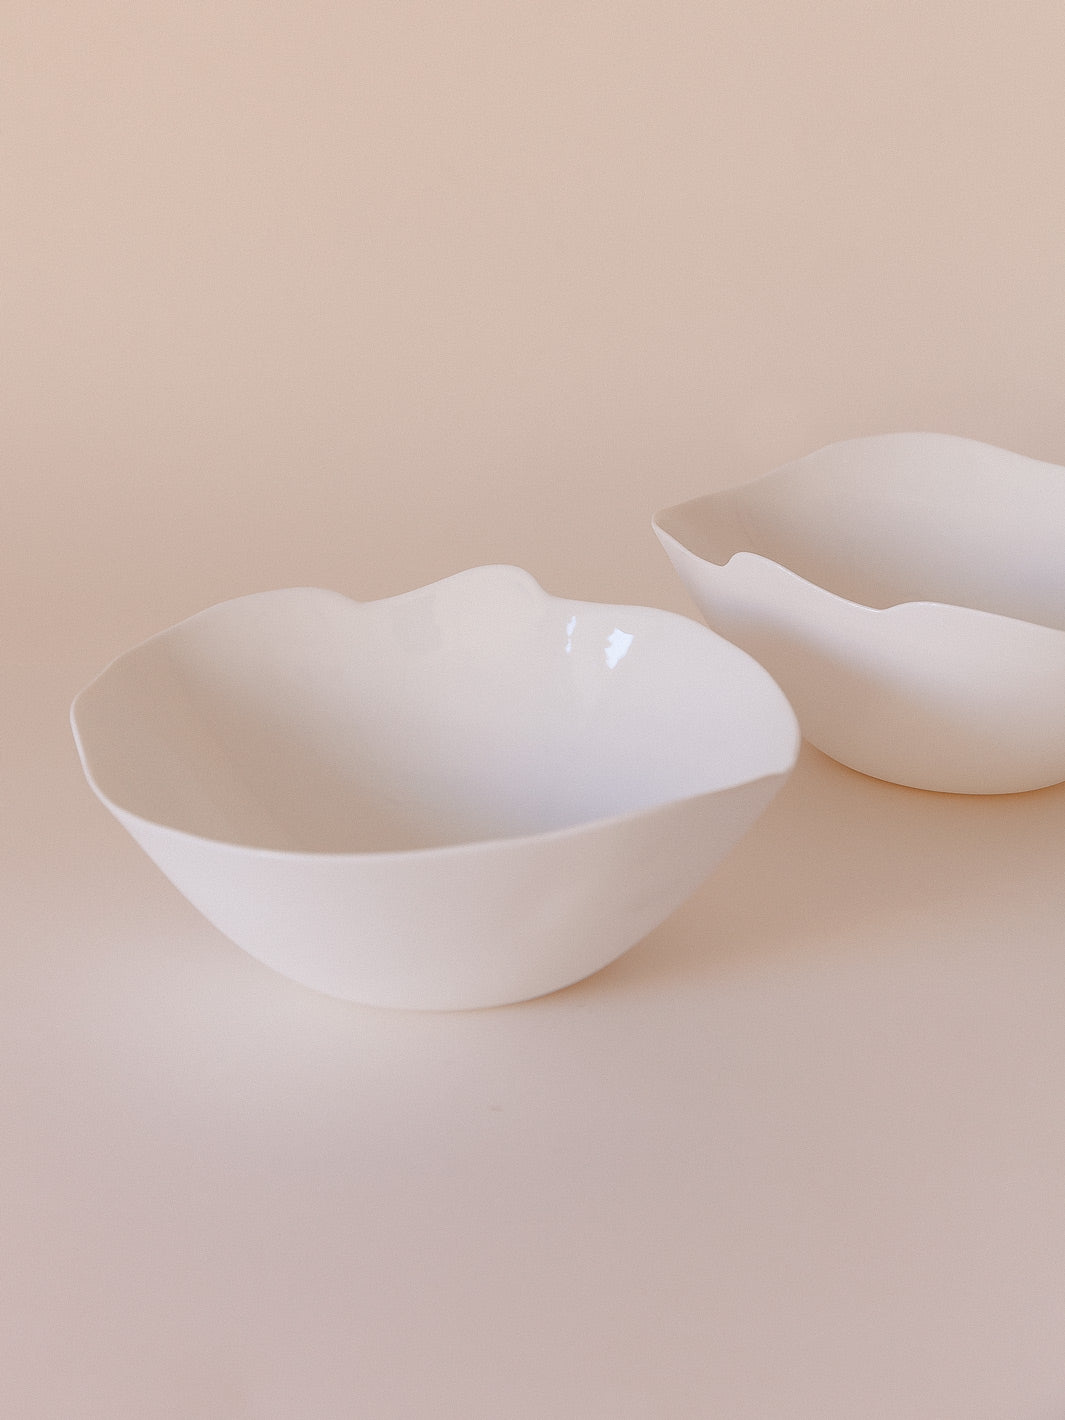 Salad bowl "Perfect Imperfection" by Roos Van de Velde